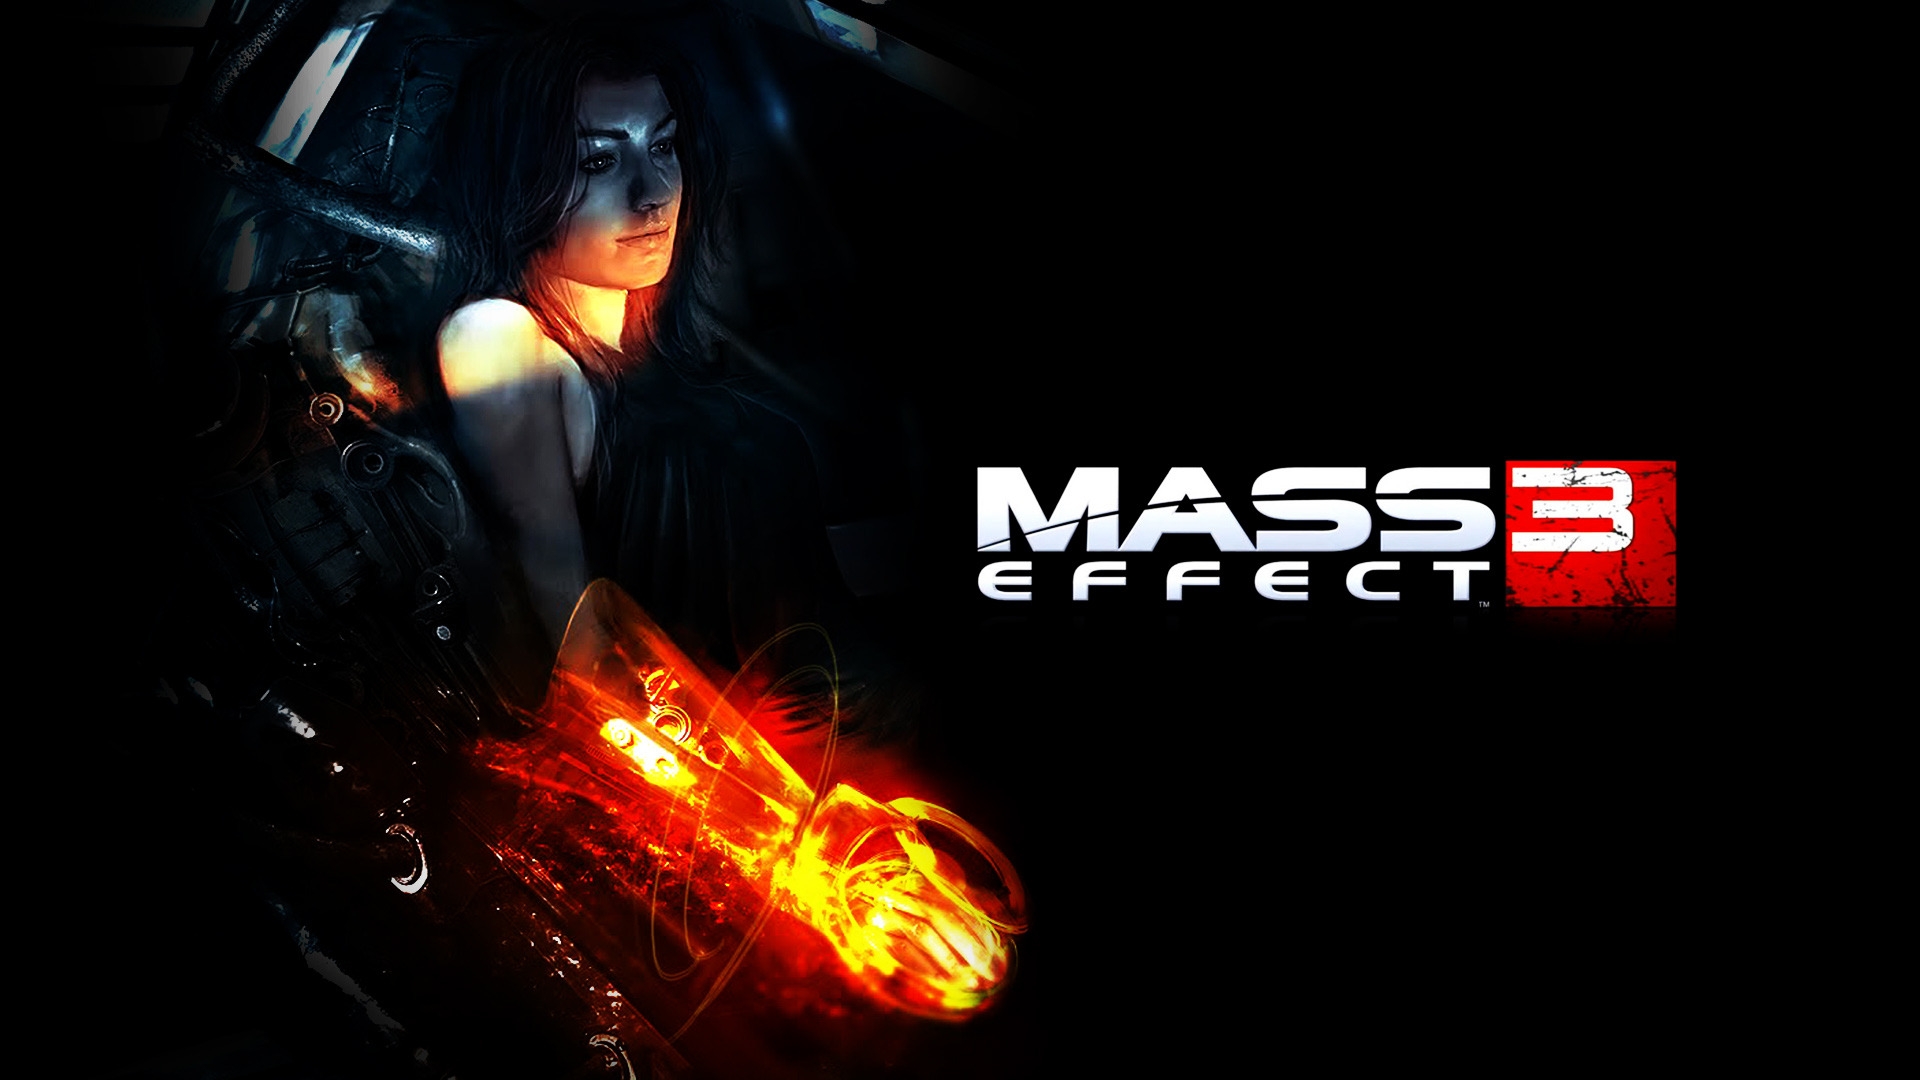 Miranda Mass Effect 3 for 1920 x 1080 HDTV 1080p resolution